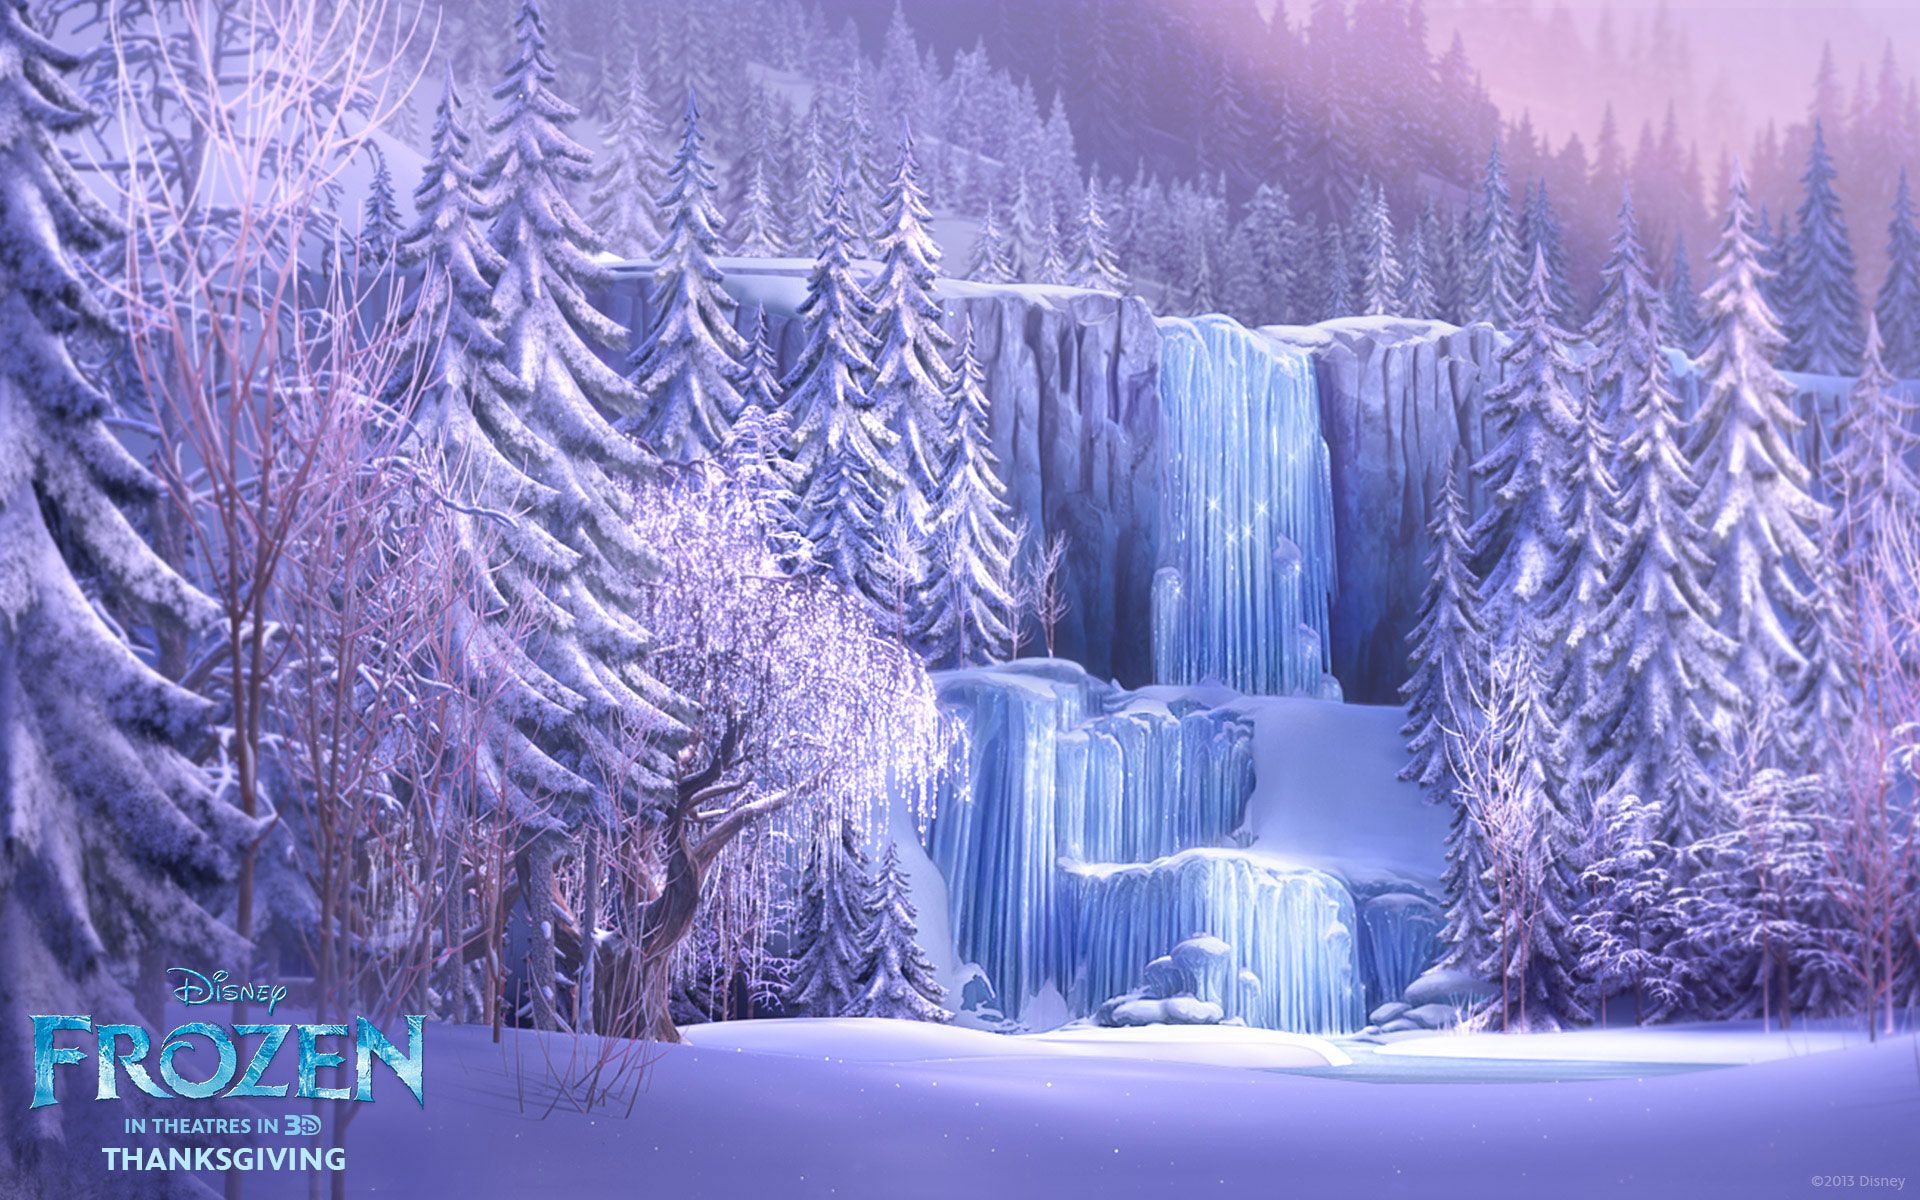 Frozen Background. Disney Frozen Wallpaper, Frozen Wallpaper and Frozen Fruit Wallpaper